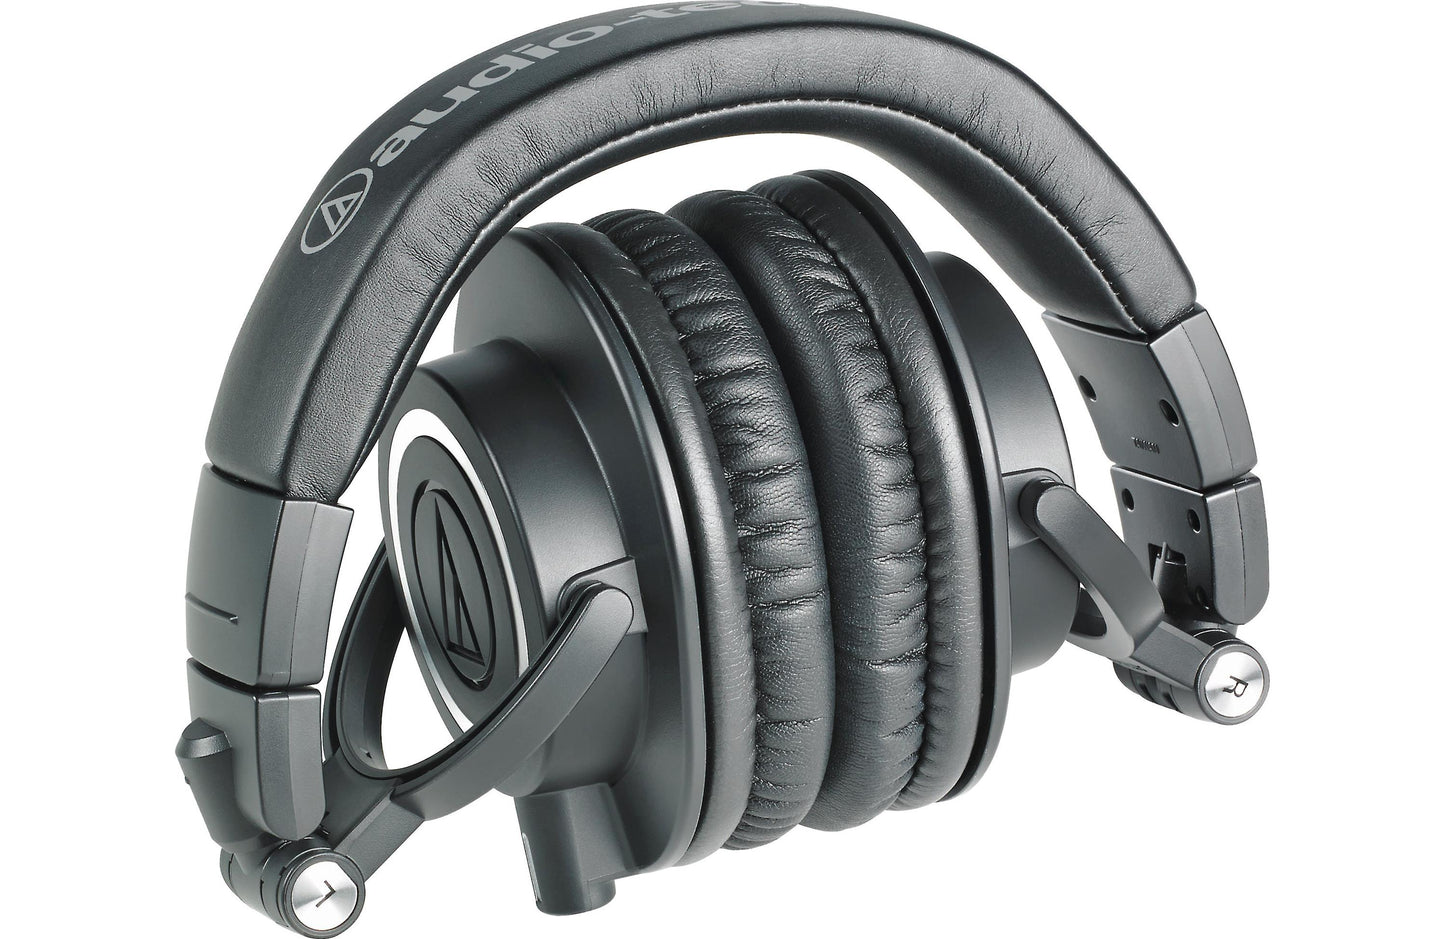 ATH-M50X Professional Studio Monitor Headphones